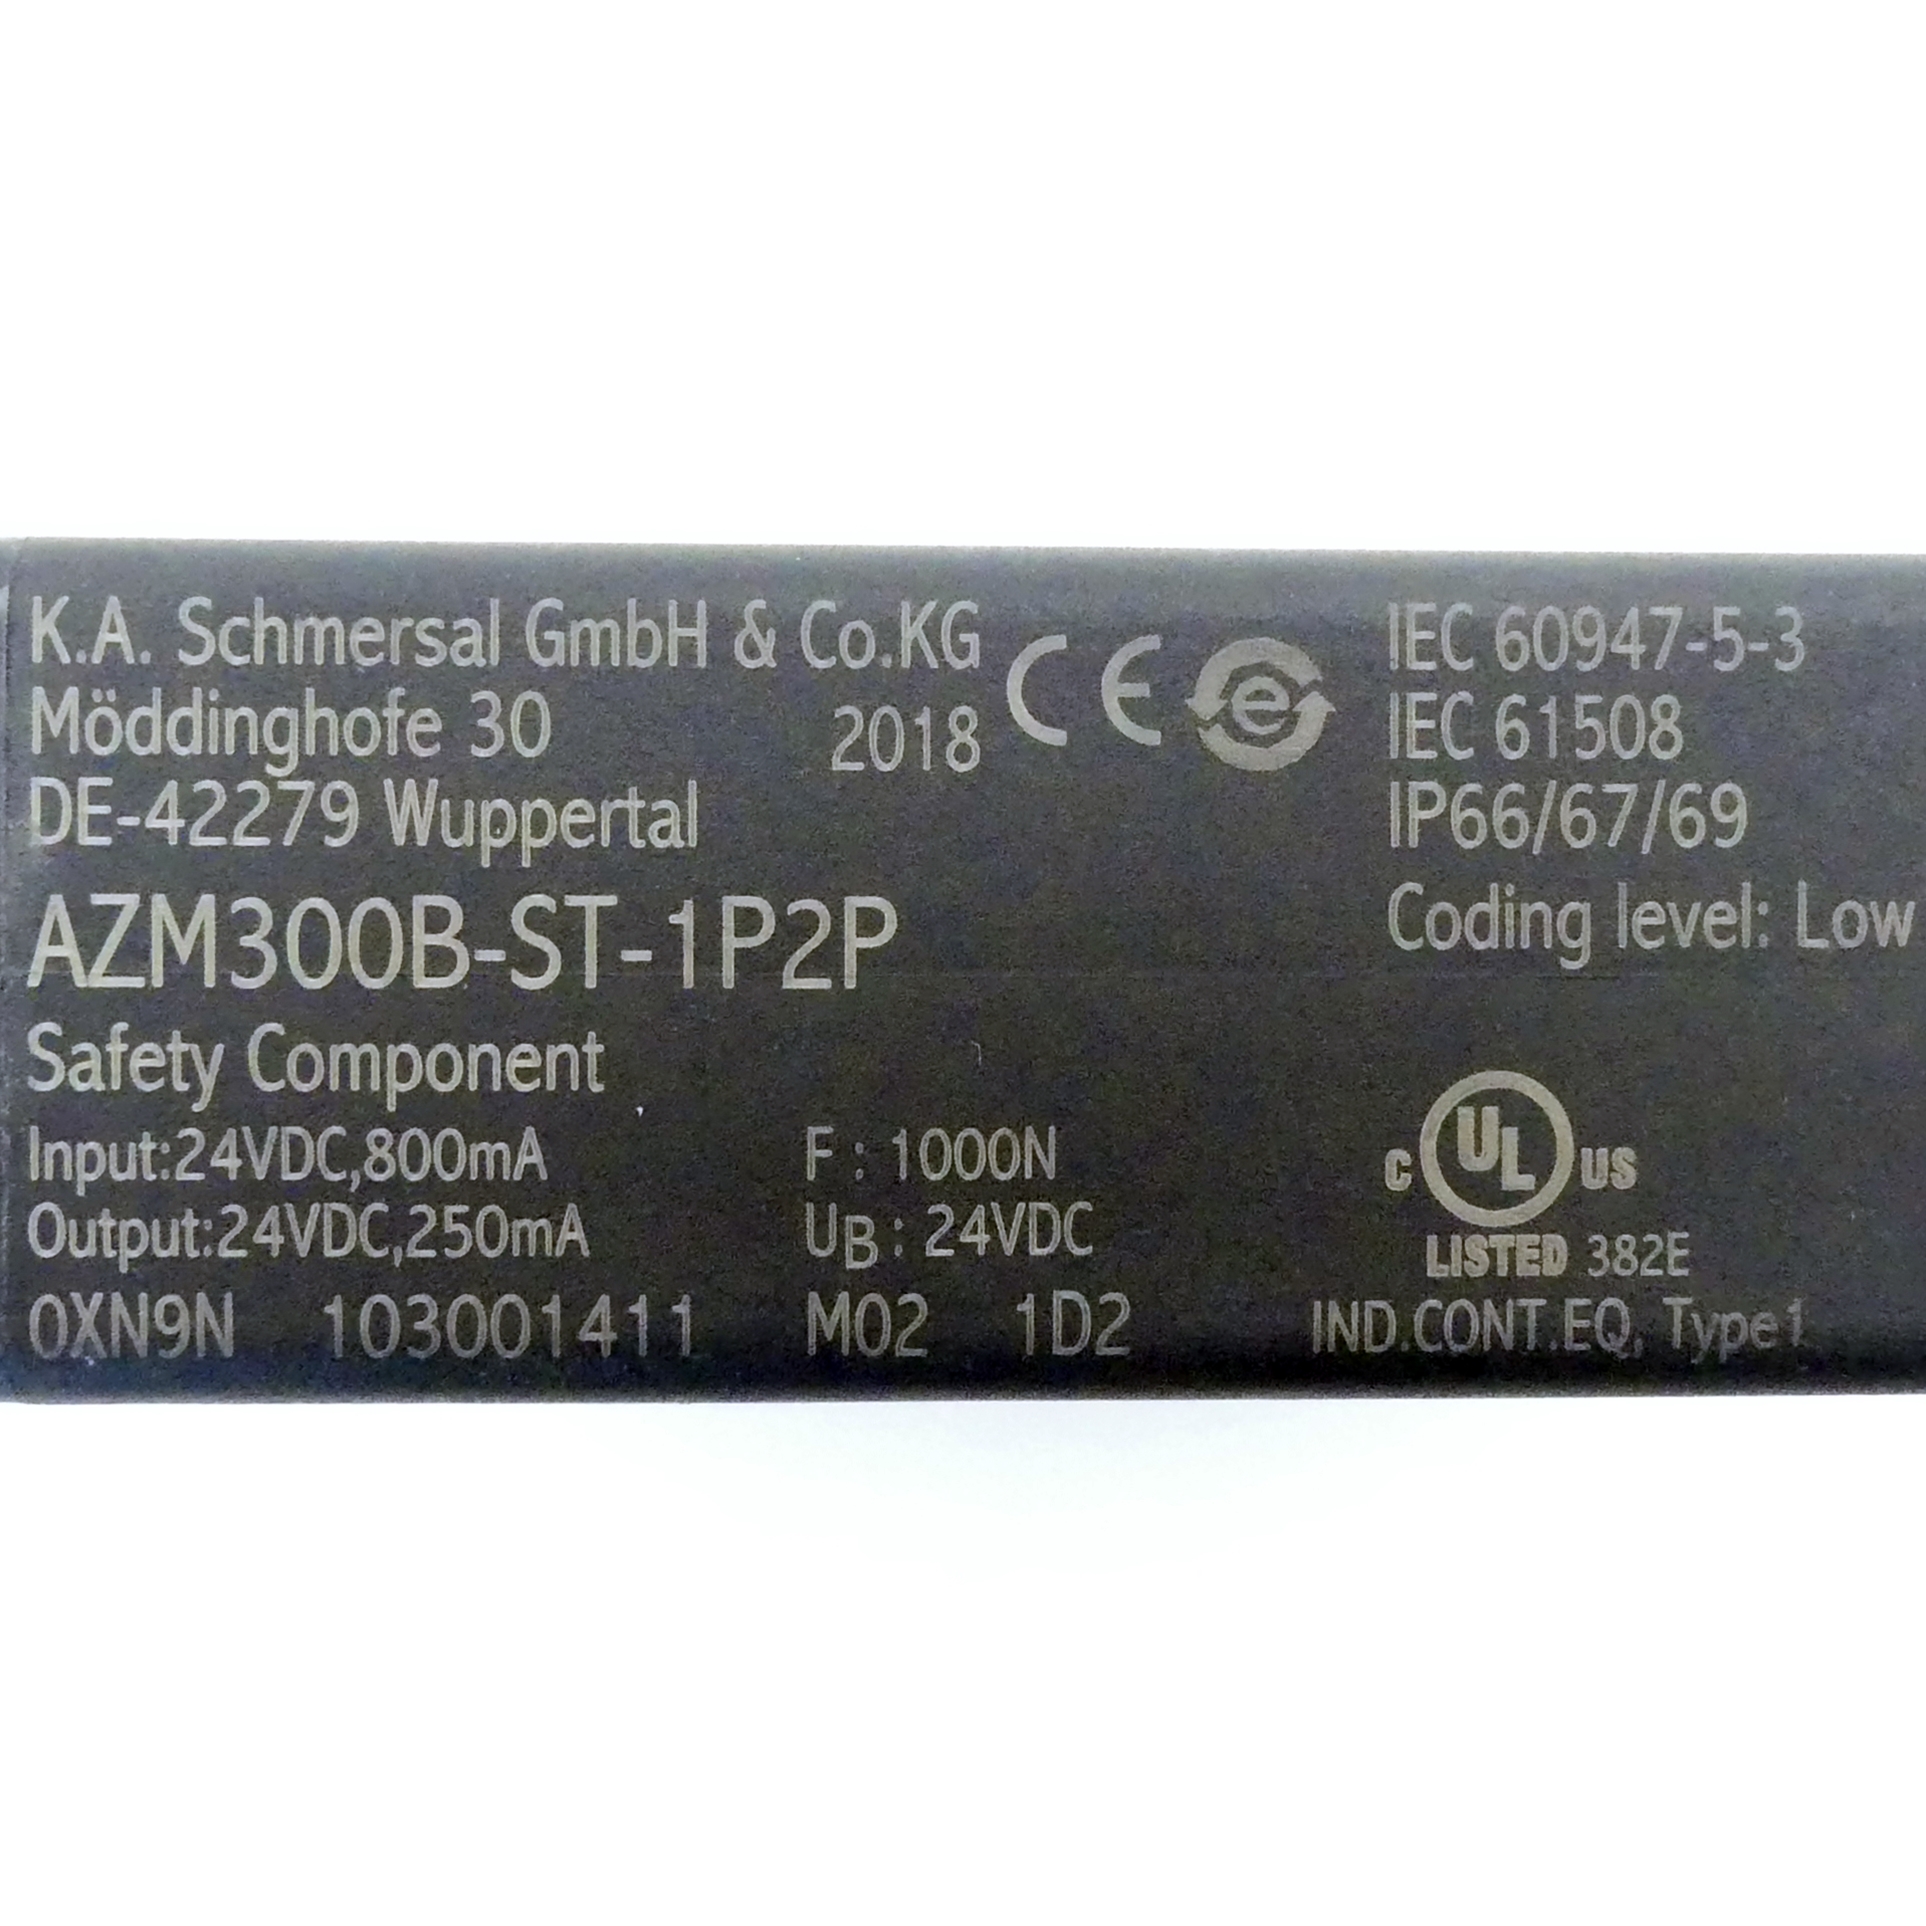 Solenoid interlock AZM300B-ST-1P2P 